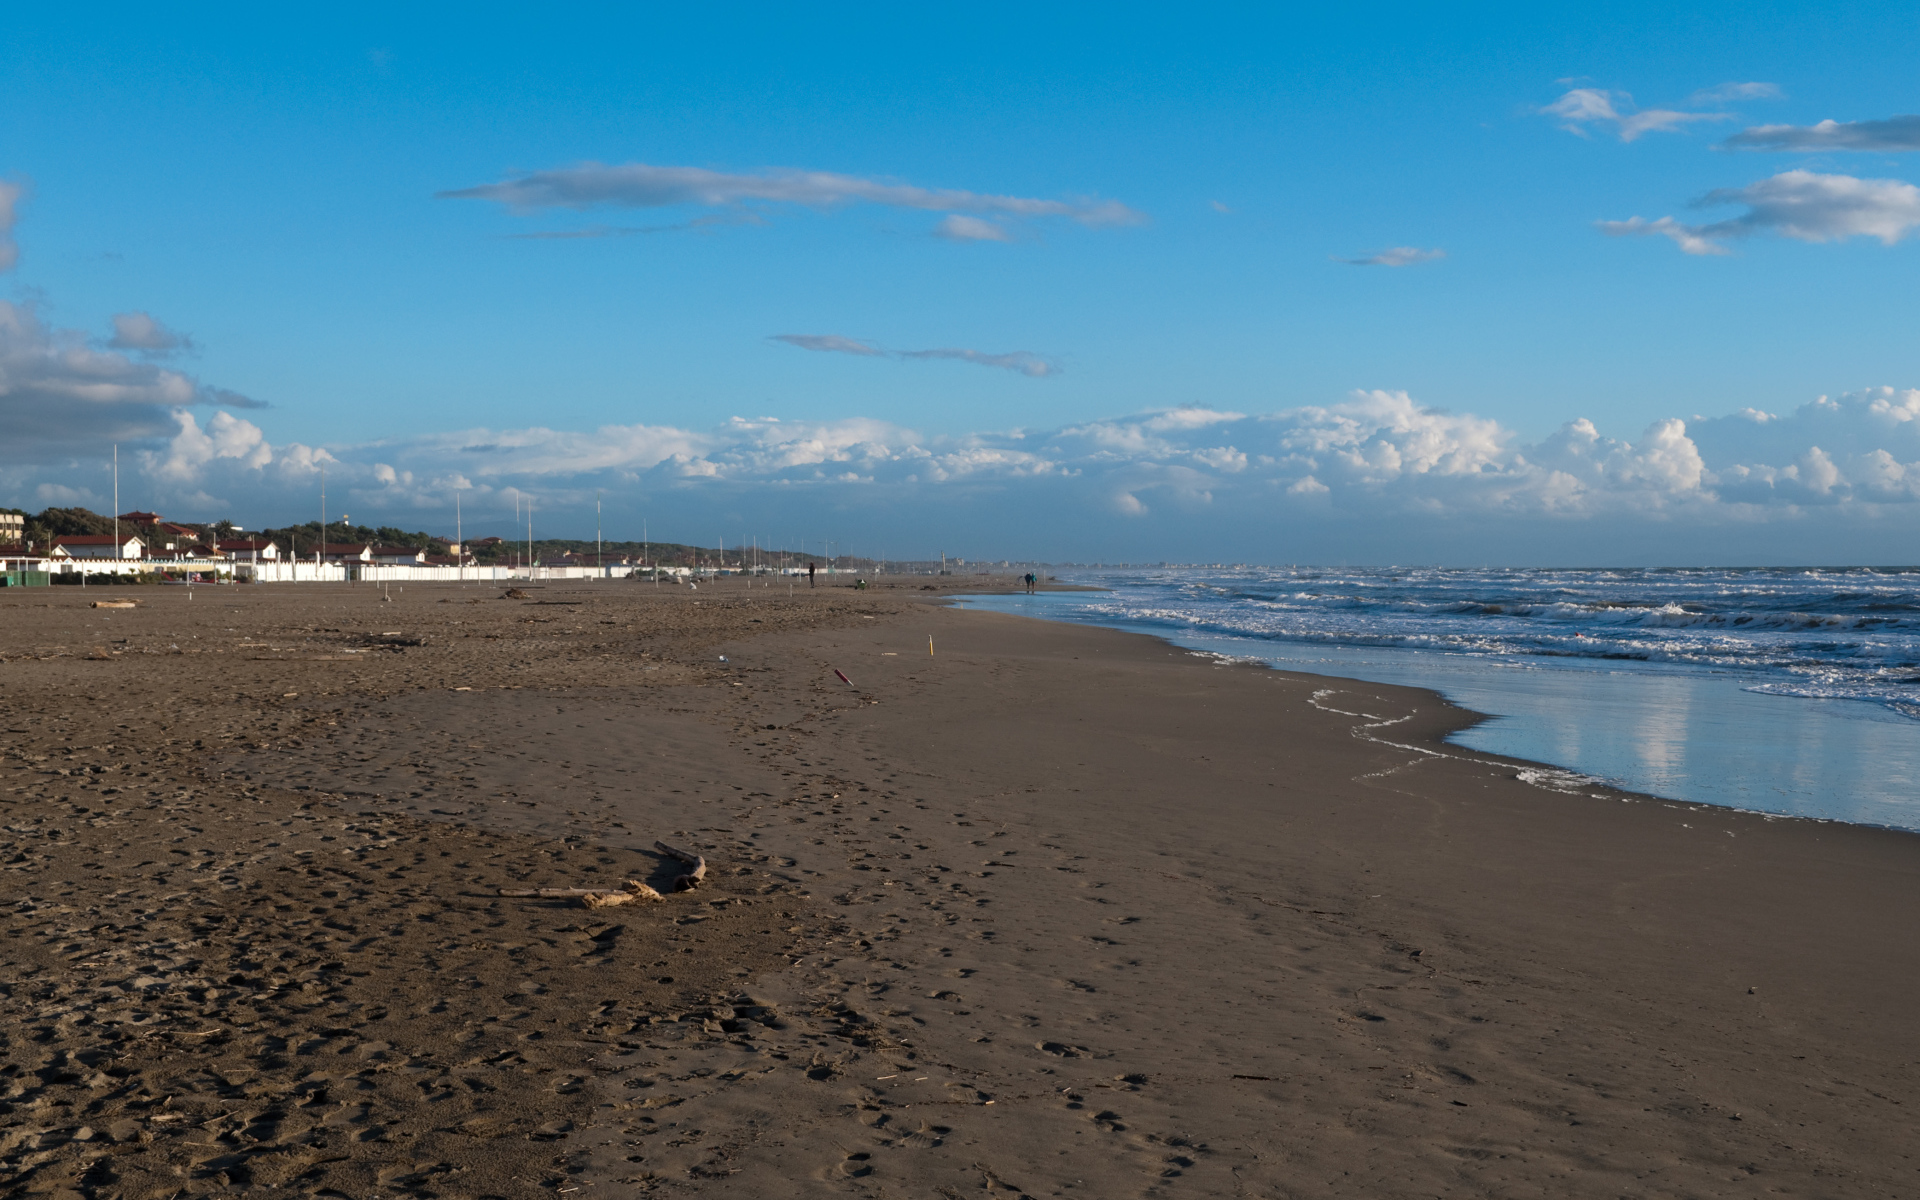 The beach at the resort of Forte dei Marmi, Italy